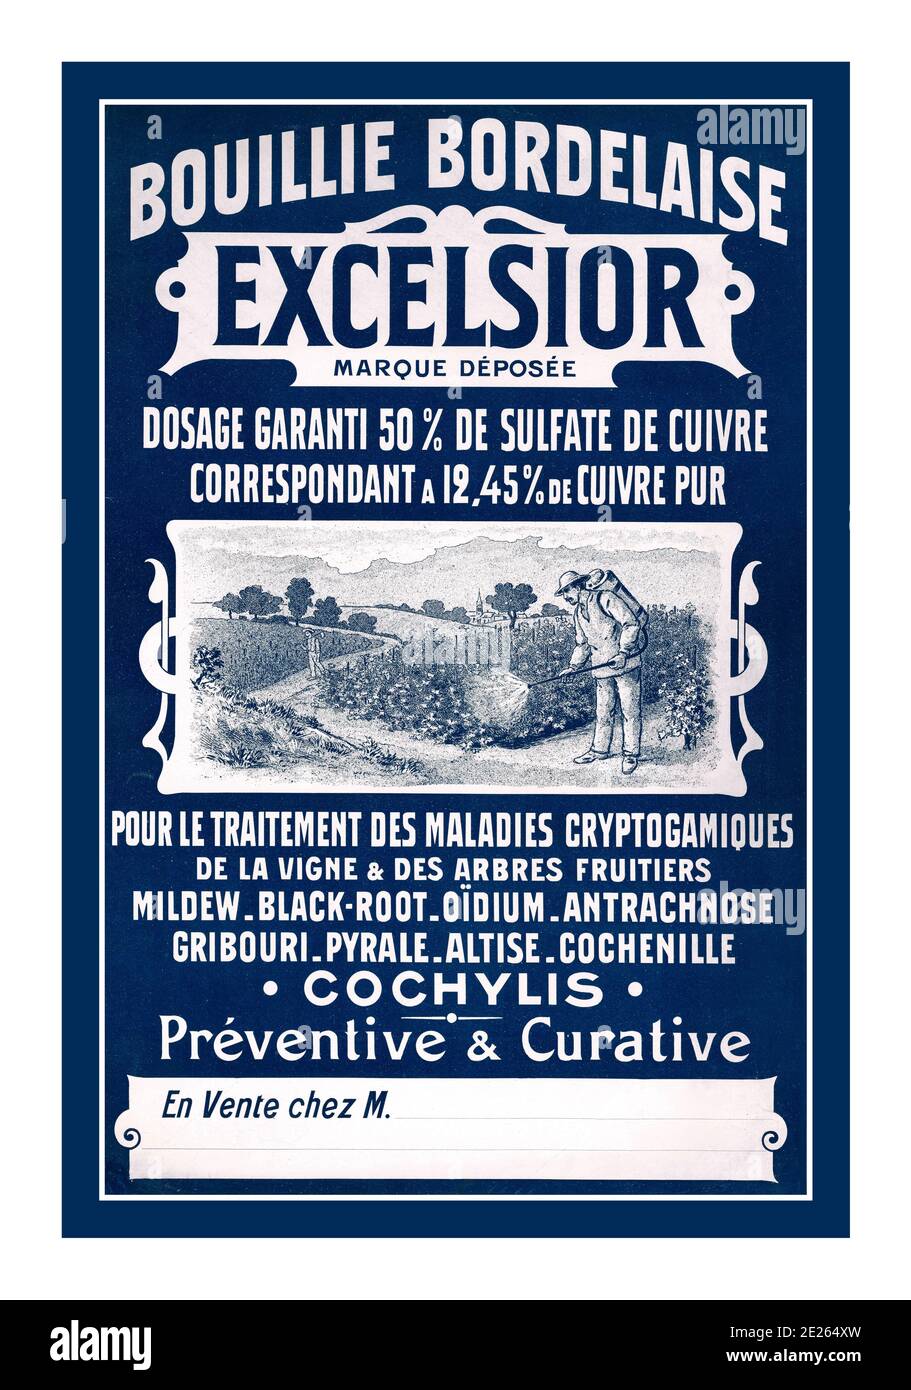 VITICULTURA 1900's Bouillie Bordelaise 'EXCELSIOR' Vintage tratamiento de viticultura francesa Litografía del cartel del producto del aerosol Foto de stock